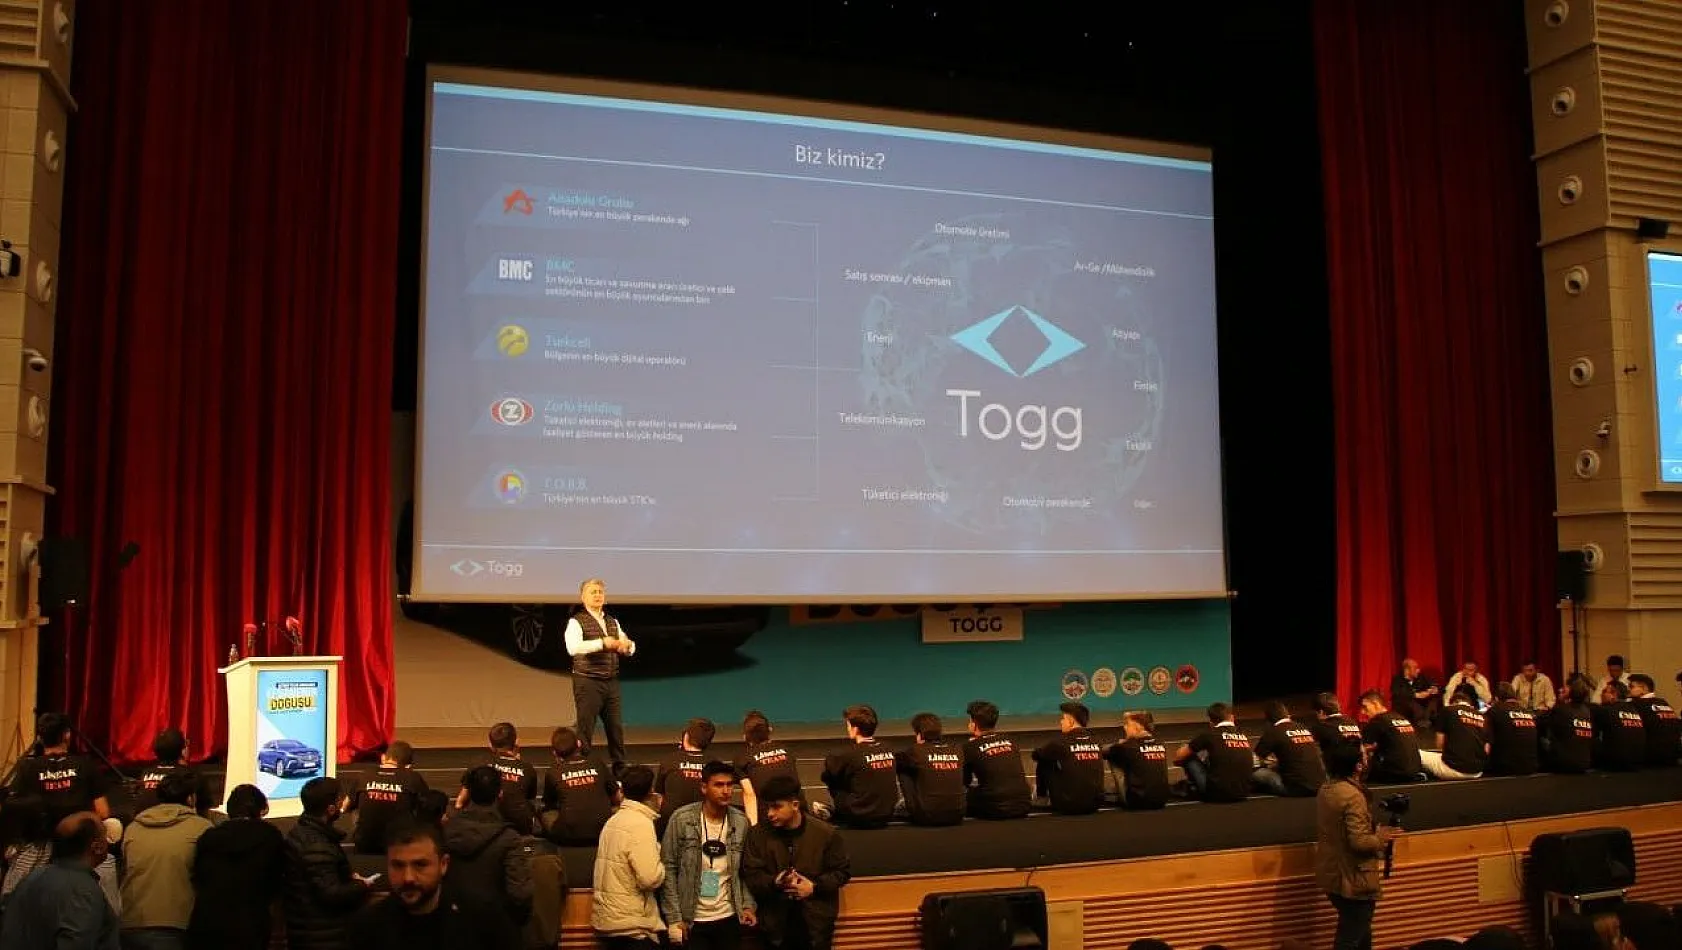 TOGG CEO'su Kayseri'ye neden geldi?